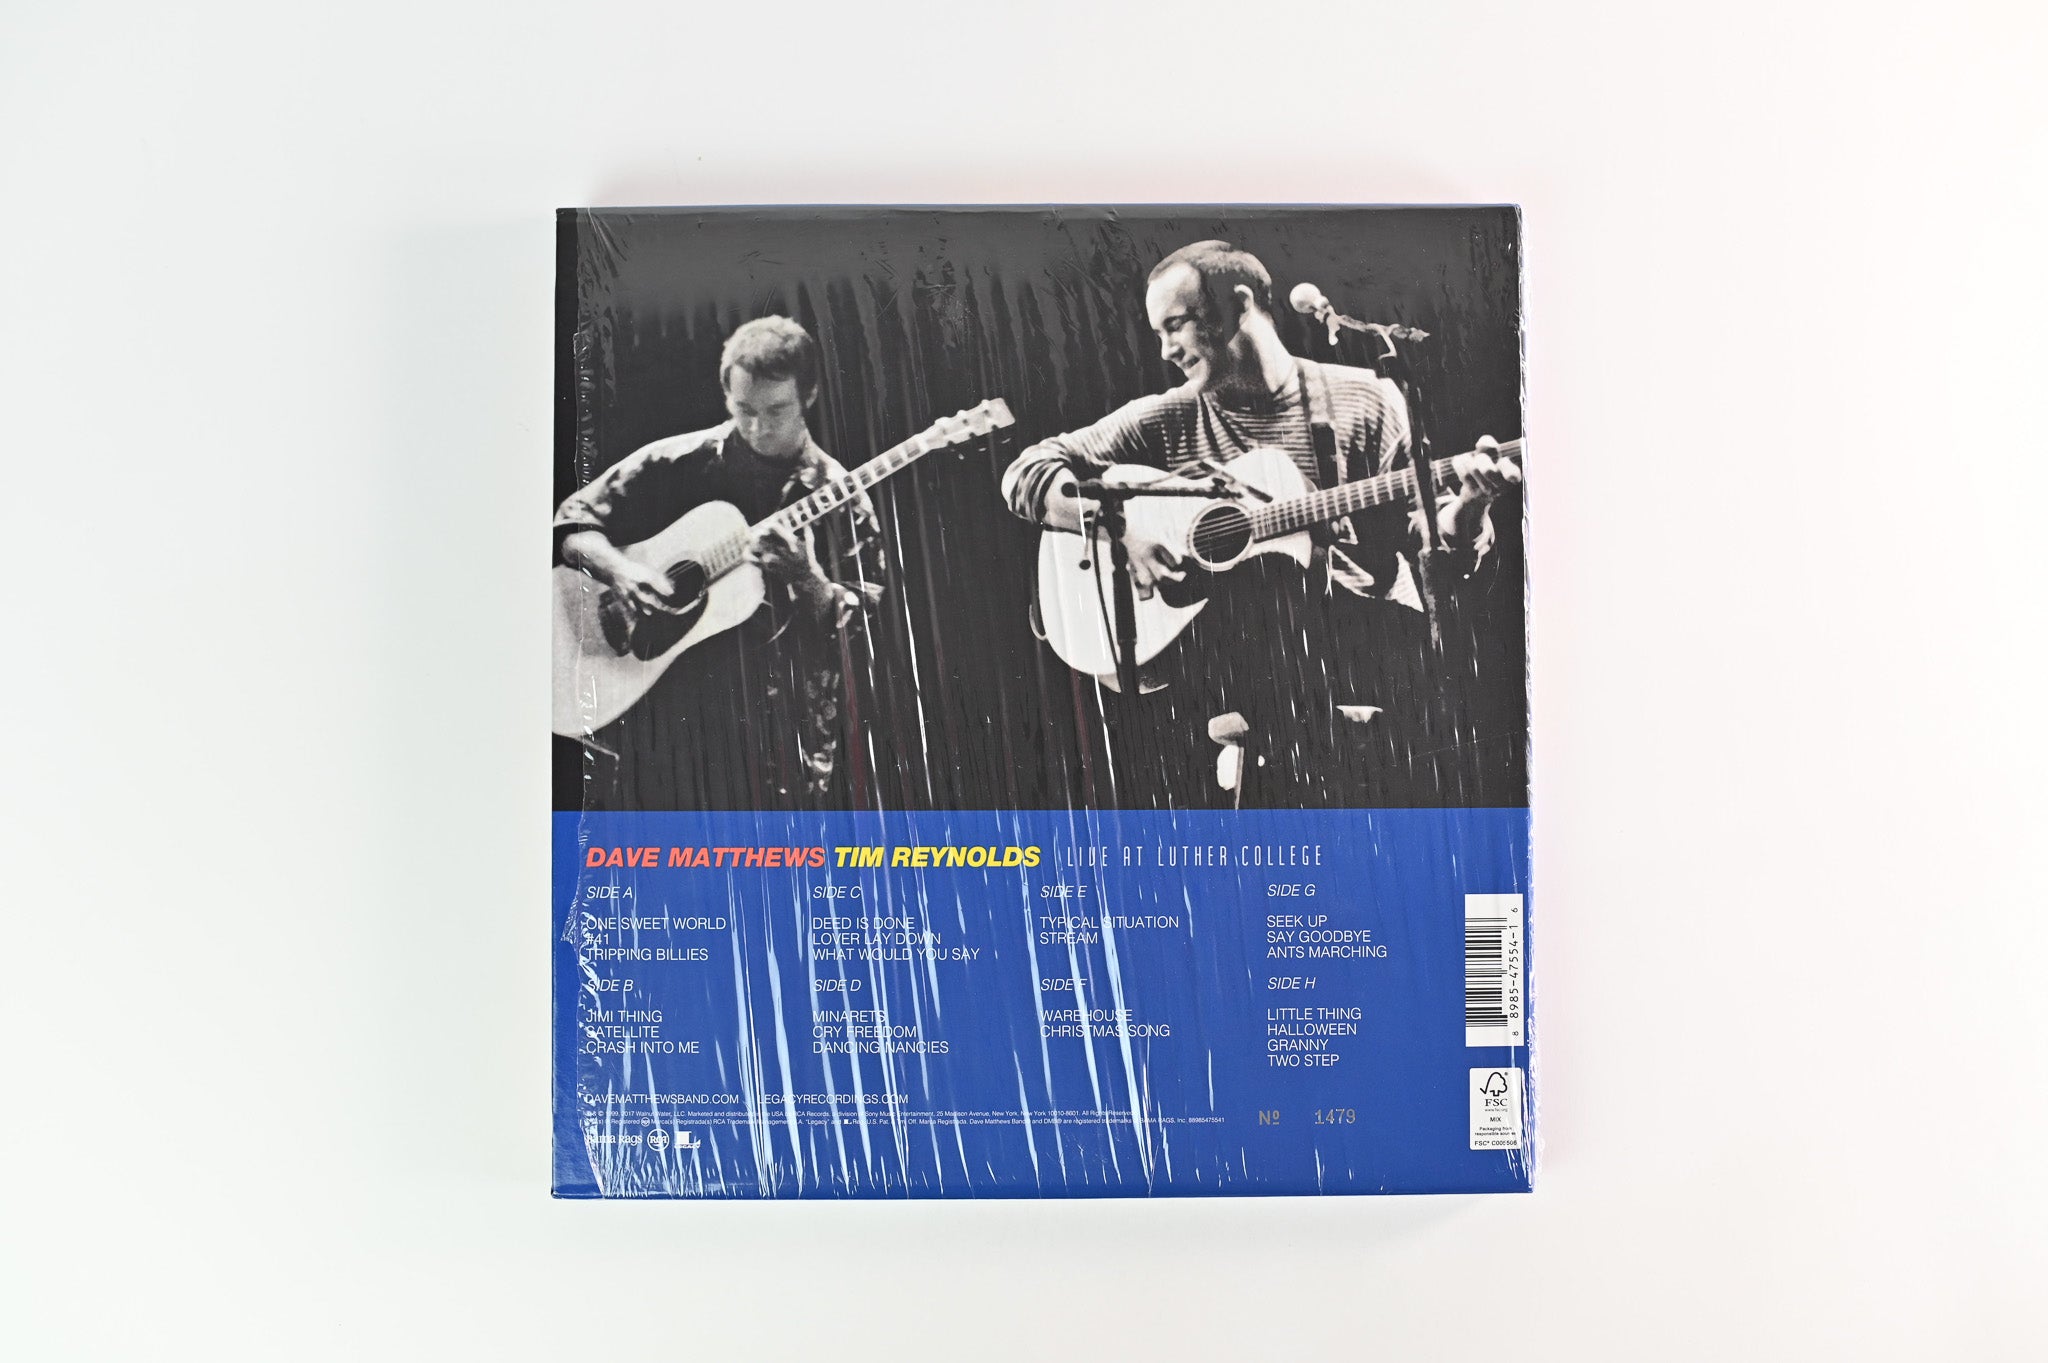 Dave Matthews & Tim Reynolds - Live At Luther College on Bama Rags Ltd RSD Splatter Reissue